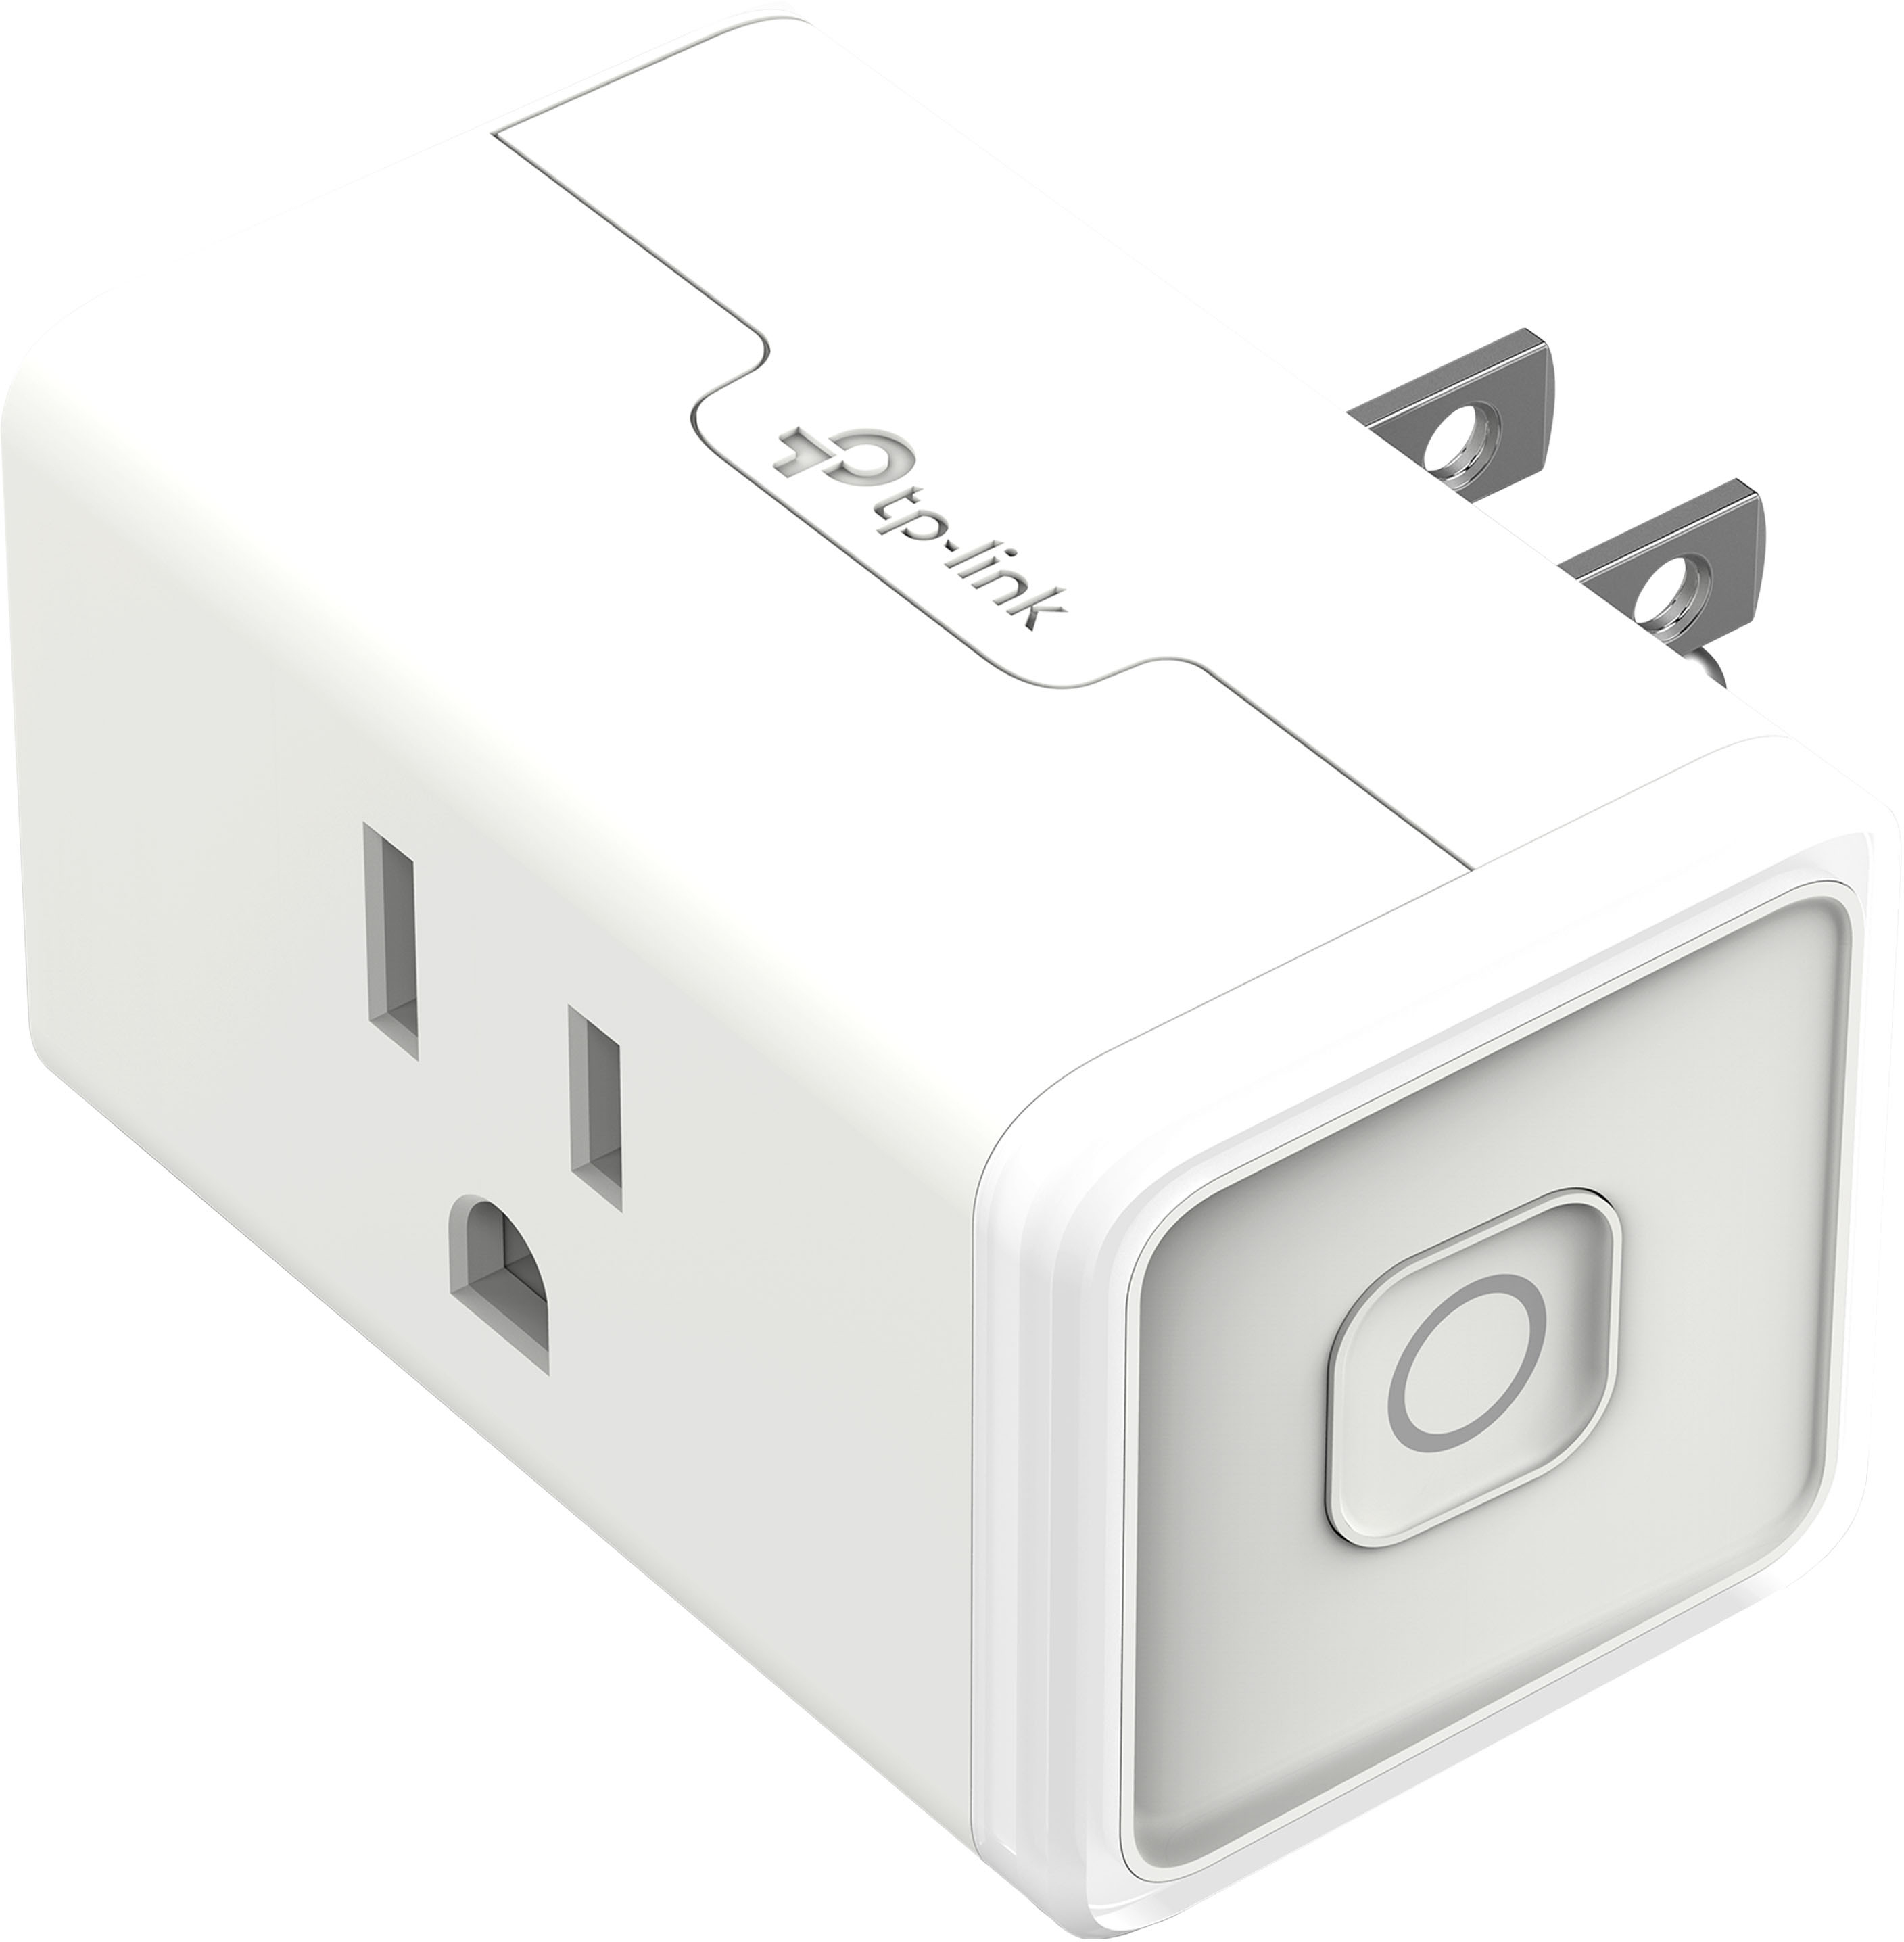 Kasa Matter Smart Plug w/ Energy Monitoring, Compact Design, 15A/1800W Max,  Super Easy Setup, Works with Apple Home, Alexa & Google Home, UL